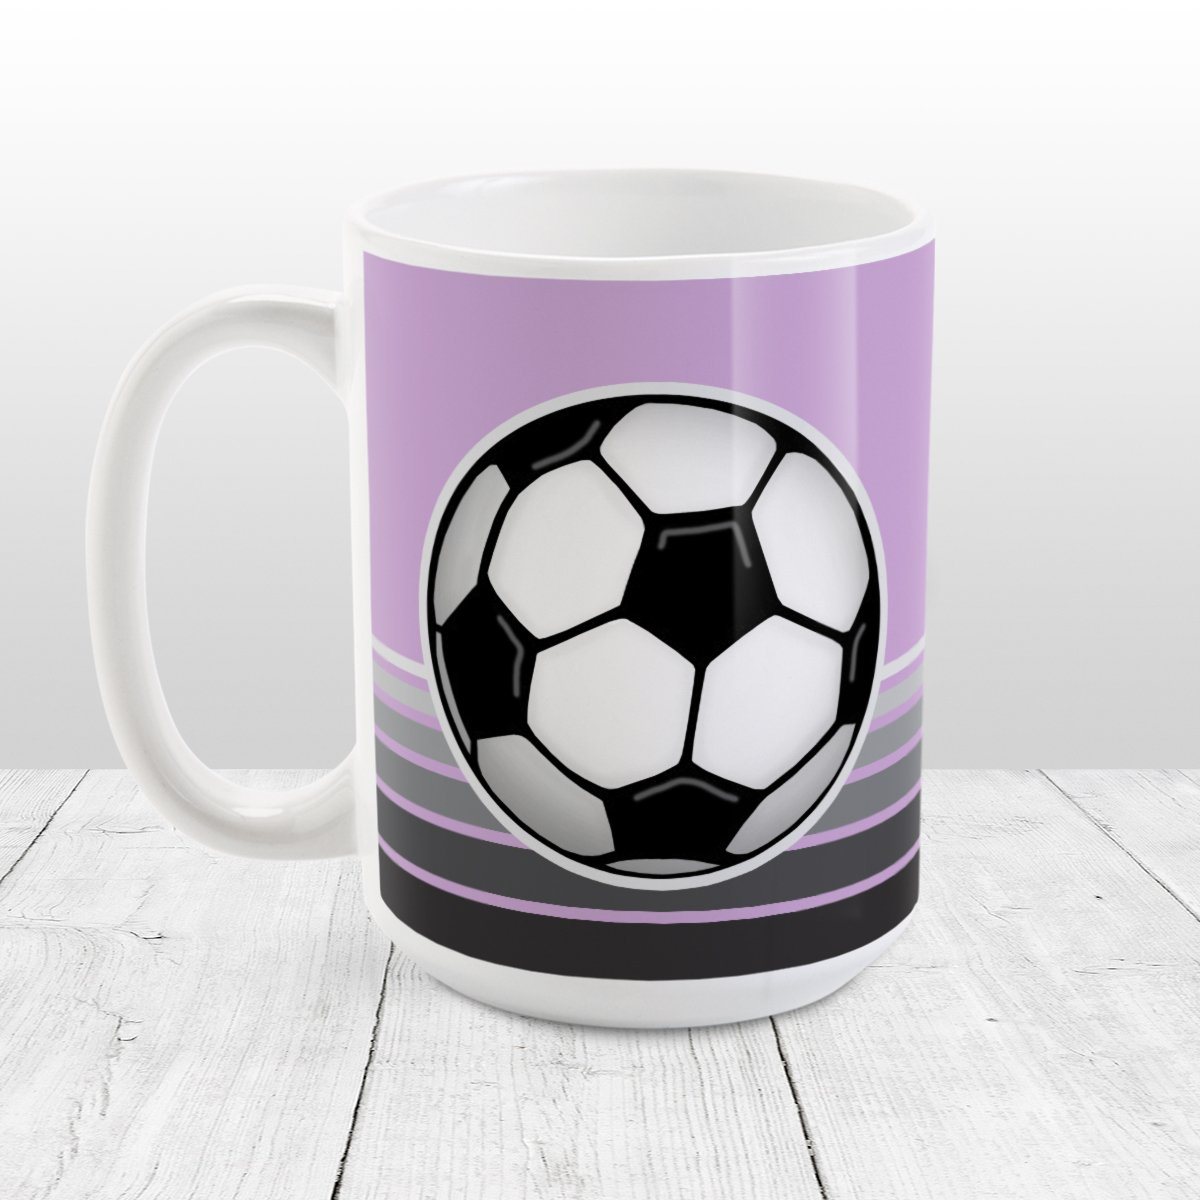 Gray Gradient Lined Purple Soccer Ball Mug at Amy's Coffee Mugs